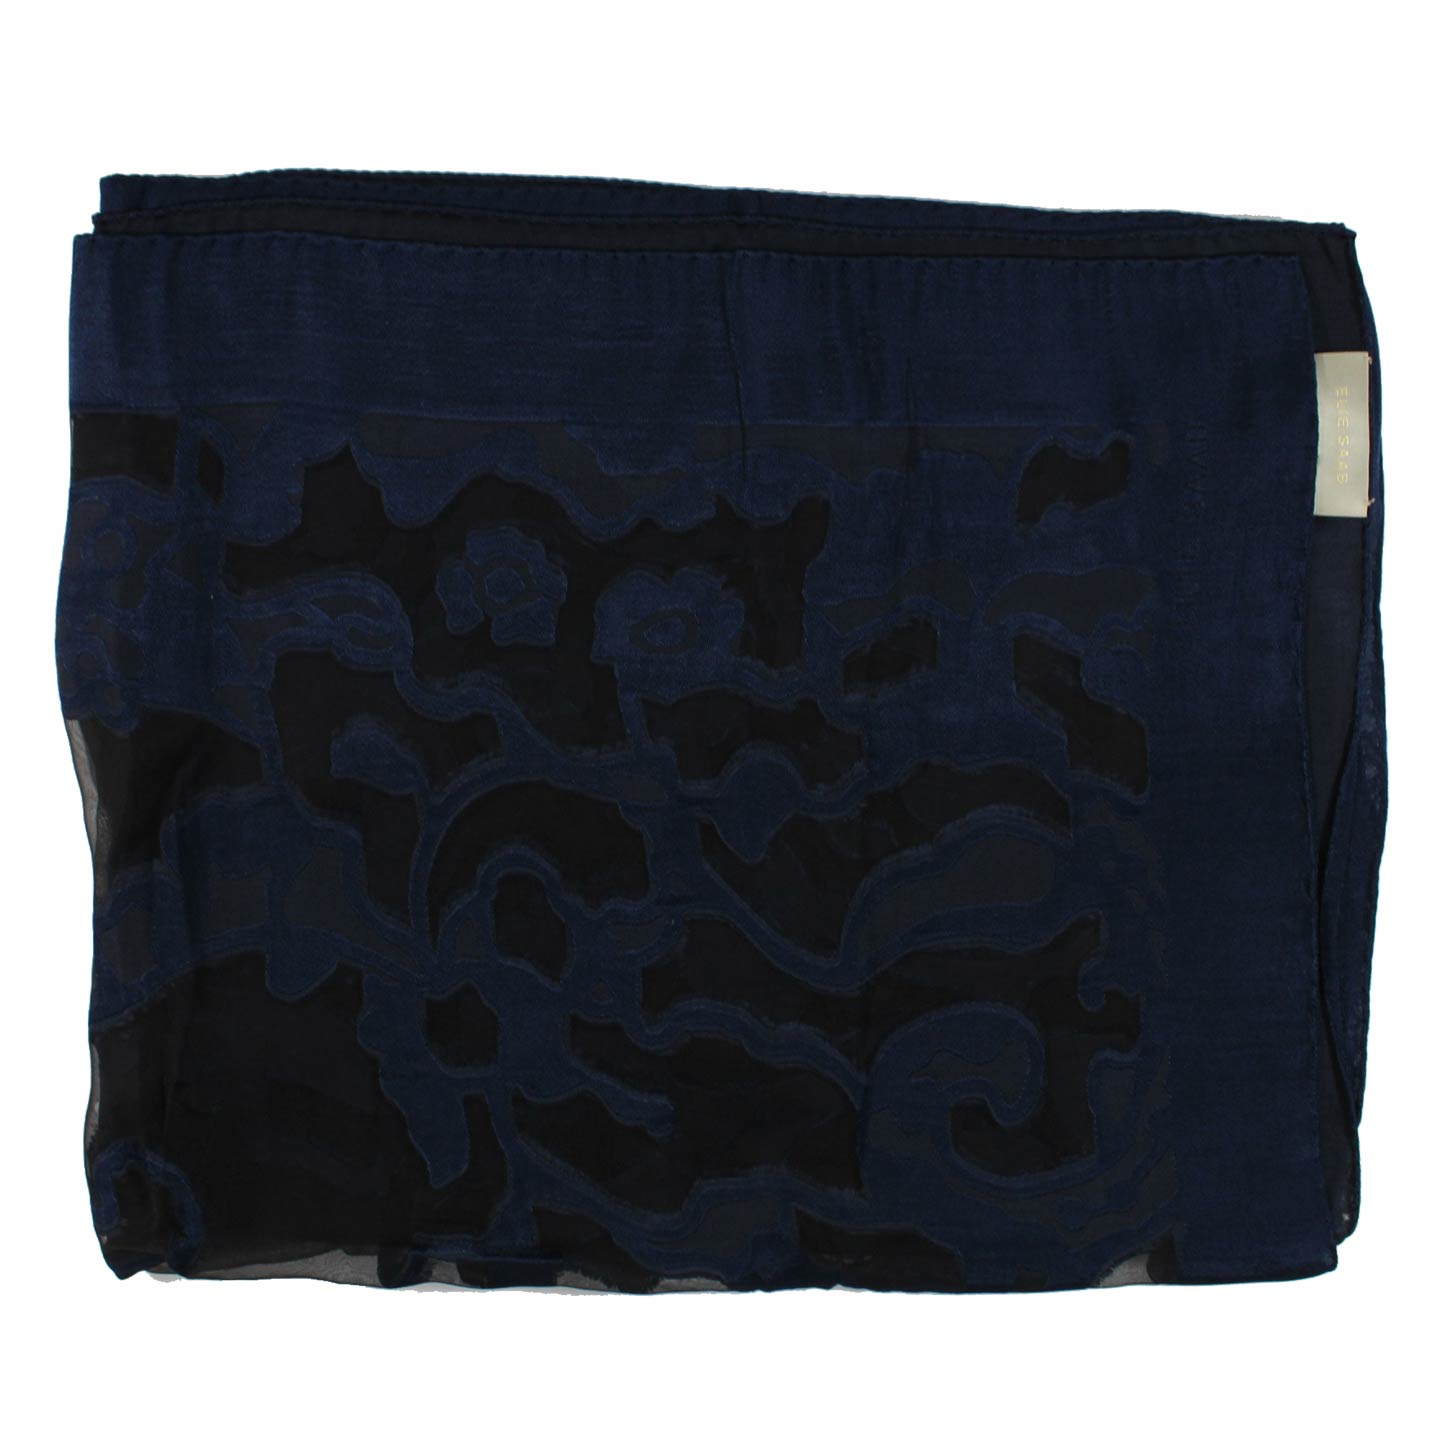 Elie Saab Scarf Dark Blue Design - Paneled Embellished Silk Shawl